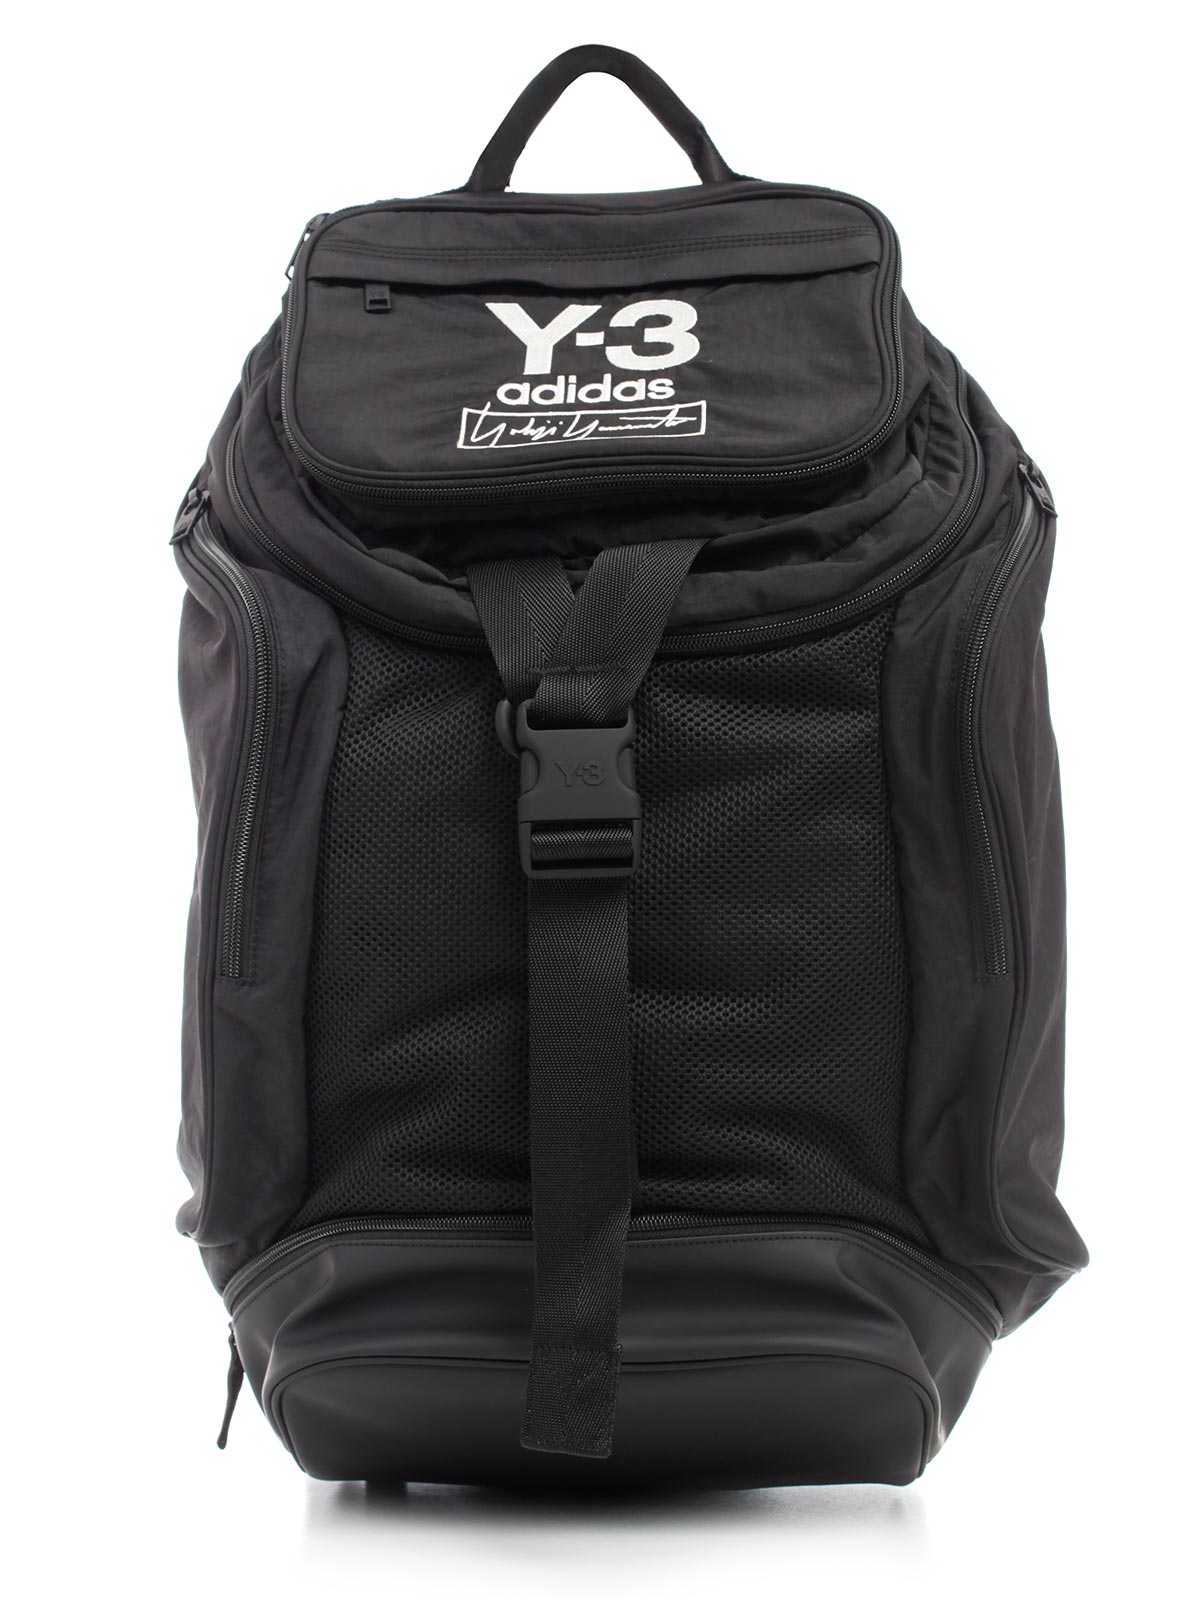 Y-3 Yohji Yamamoto Adidas Bags FH9264 